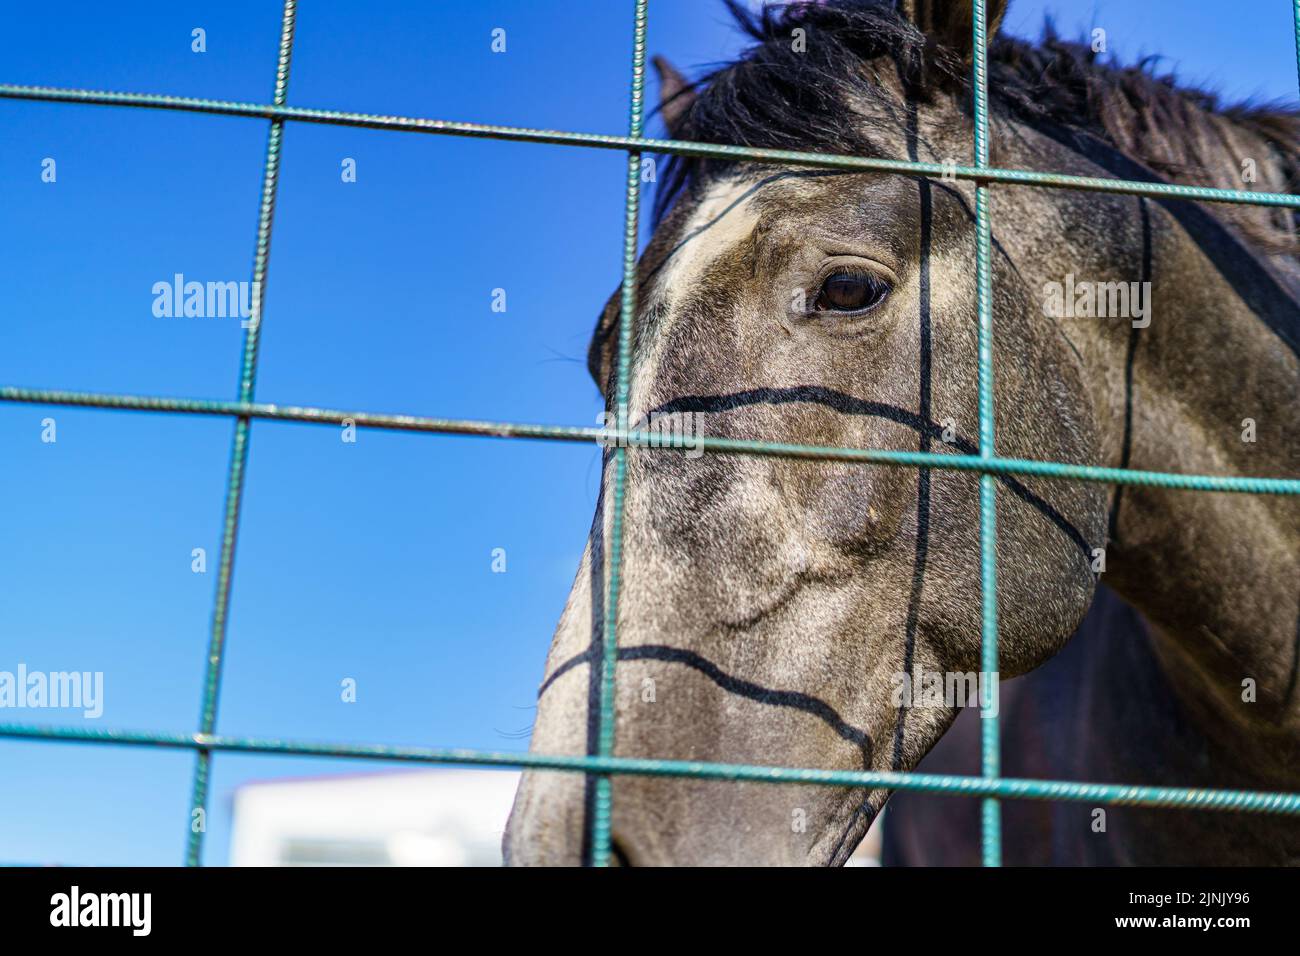 Horse's head behind iron bars. Stock Photo